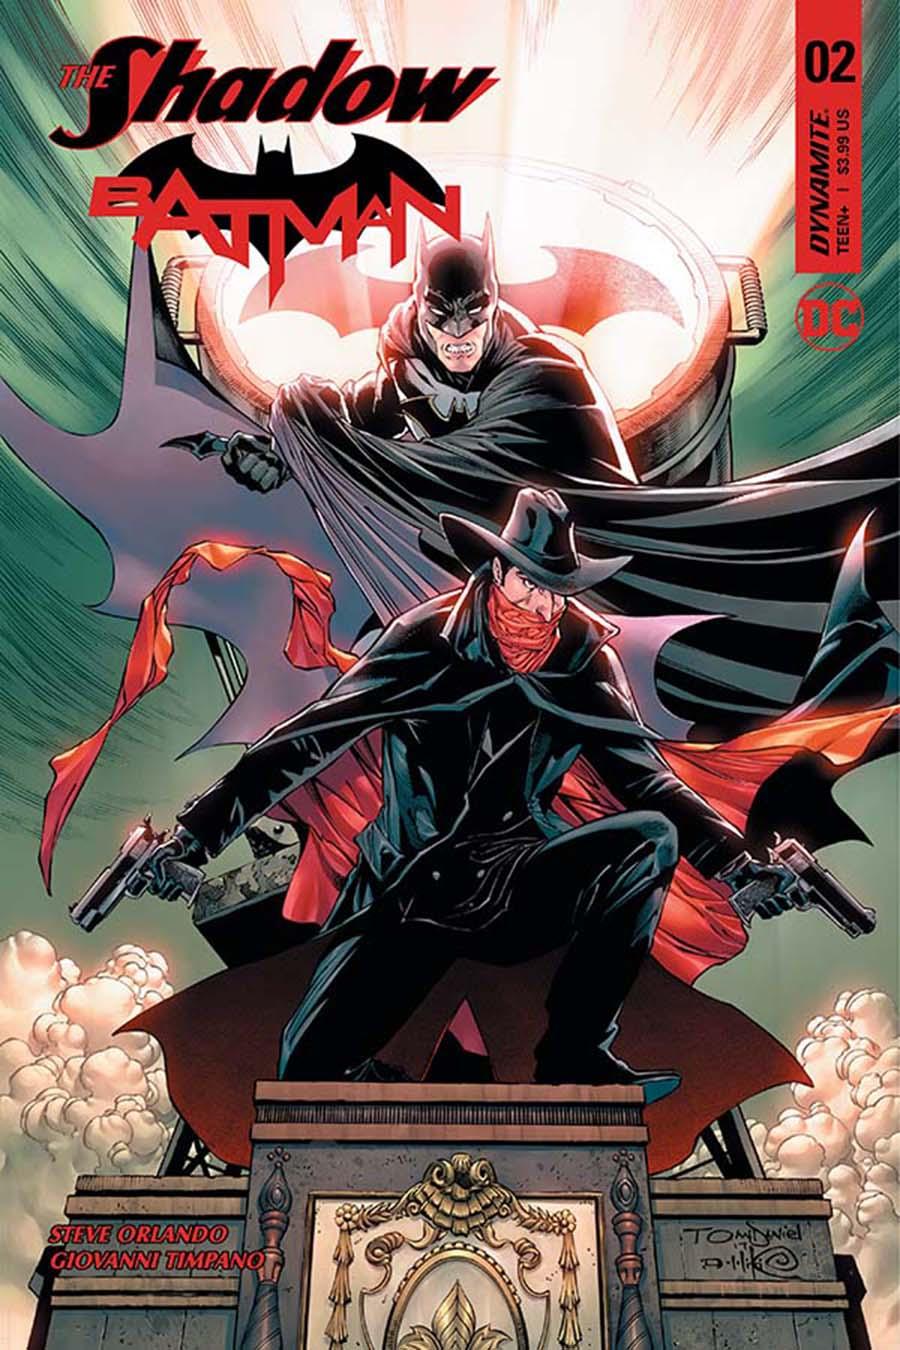 Shadow Batman Vol. 1 #2